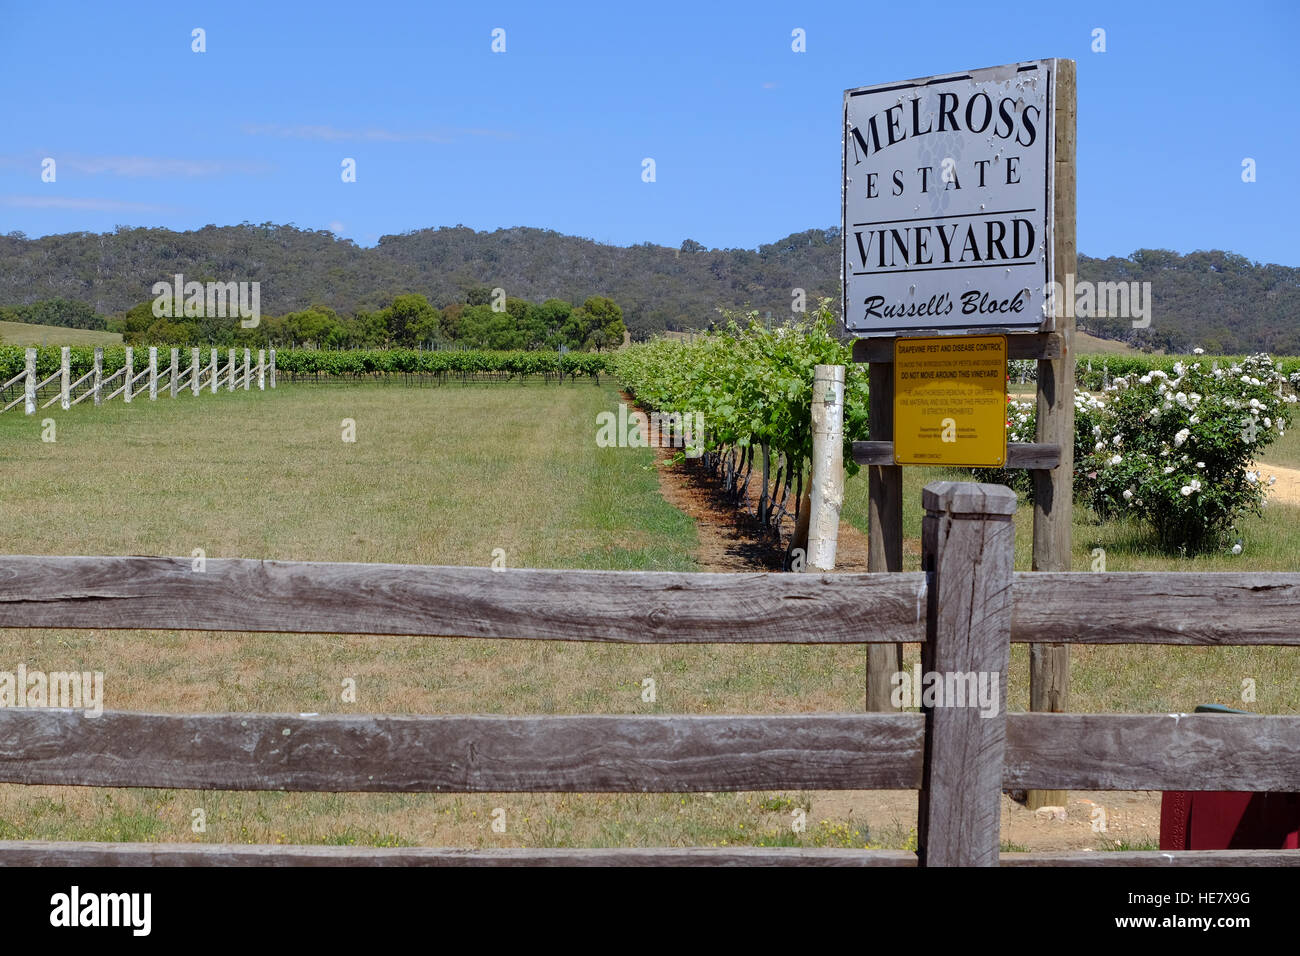 Melross Vineyard in the Pyranees wine growing region of Victoria, Australia Stock Photo